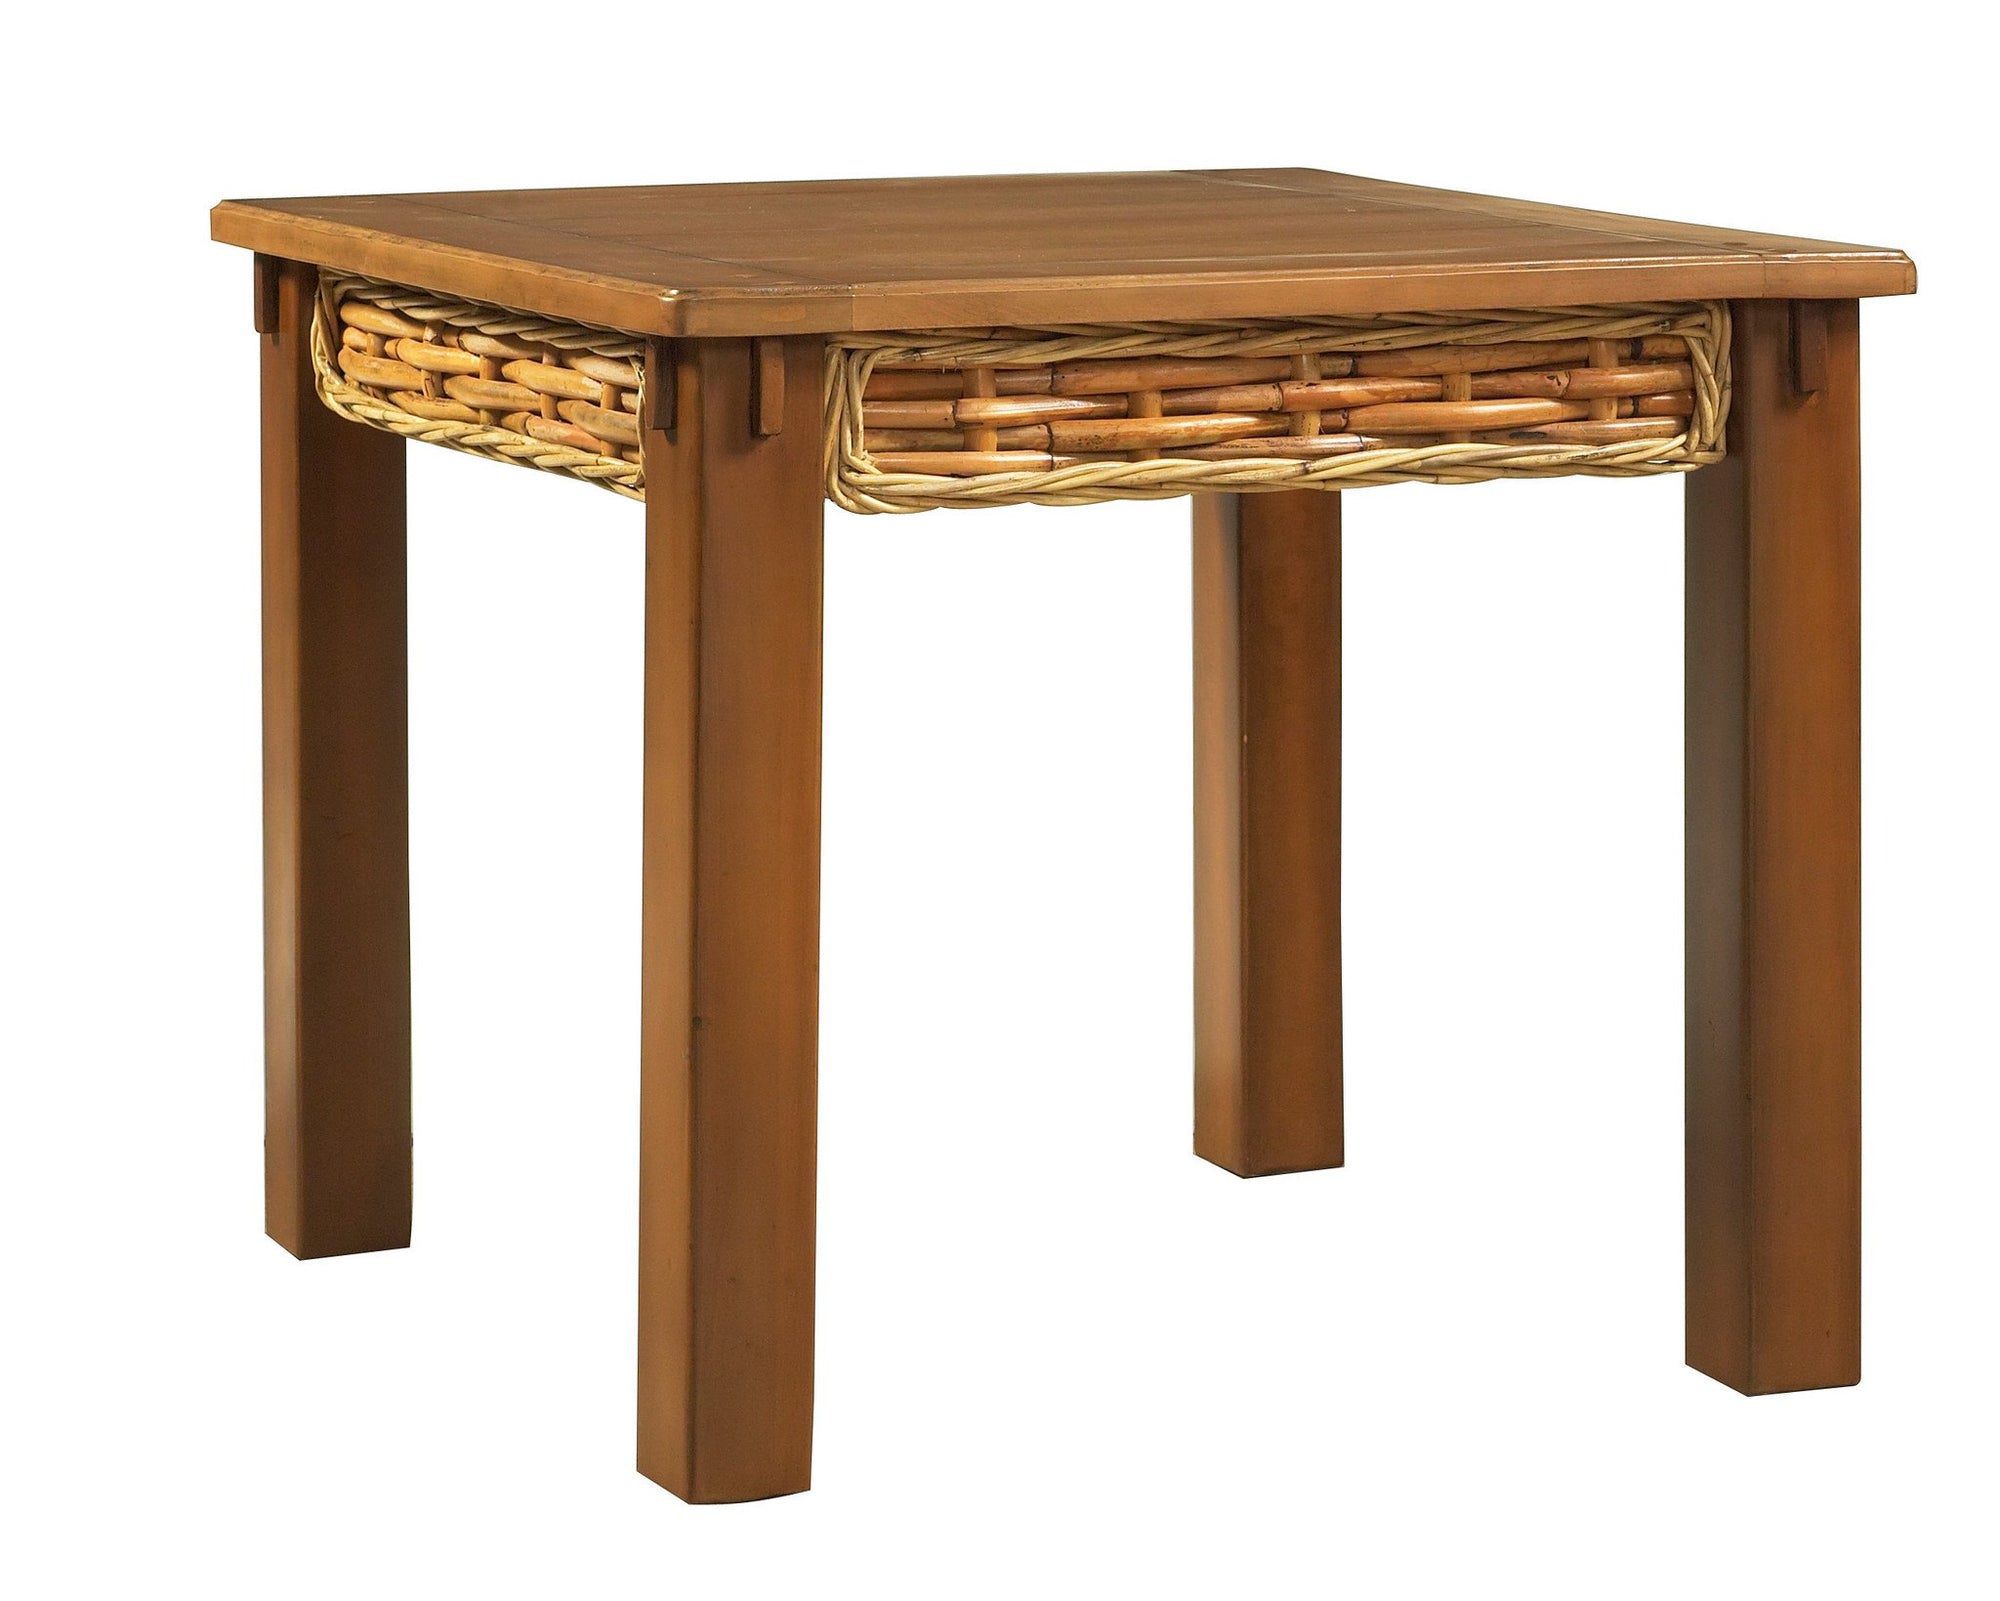 Designer Wicker & Rattan By Tribor Freeport Rectangular End Table by Designer Wicker from Tribor End Table - Rattan Imports